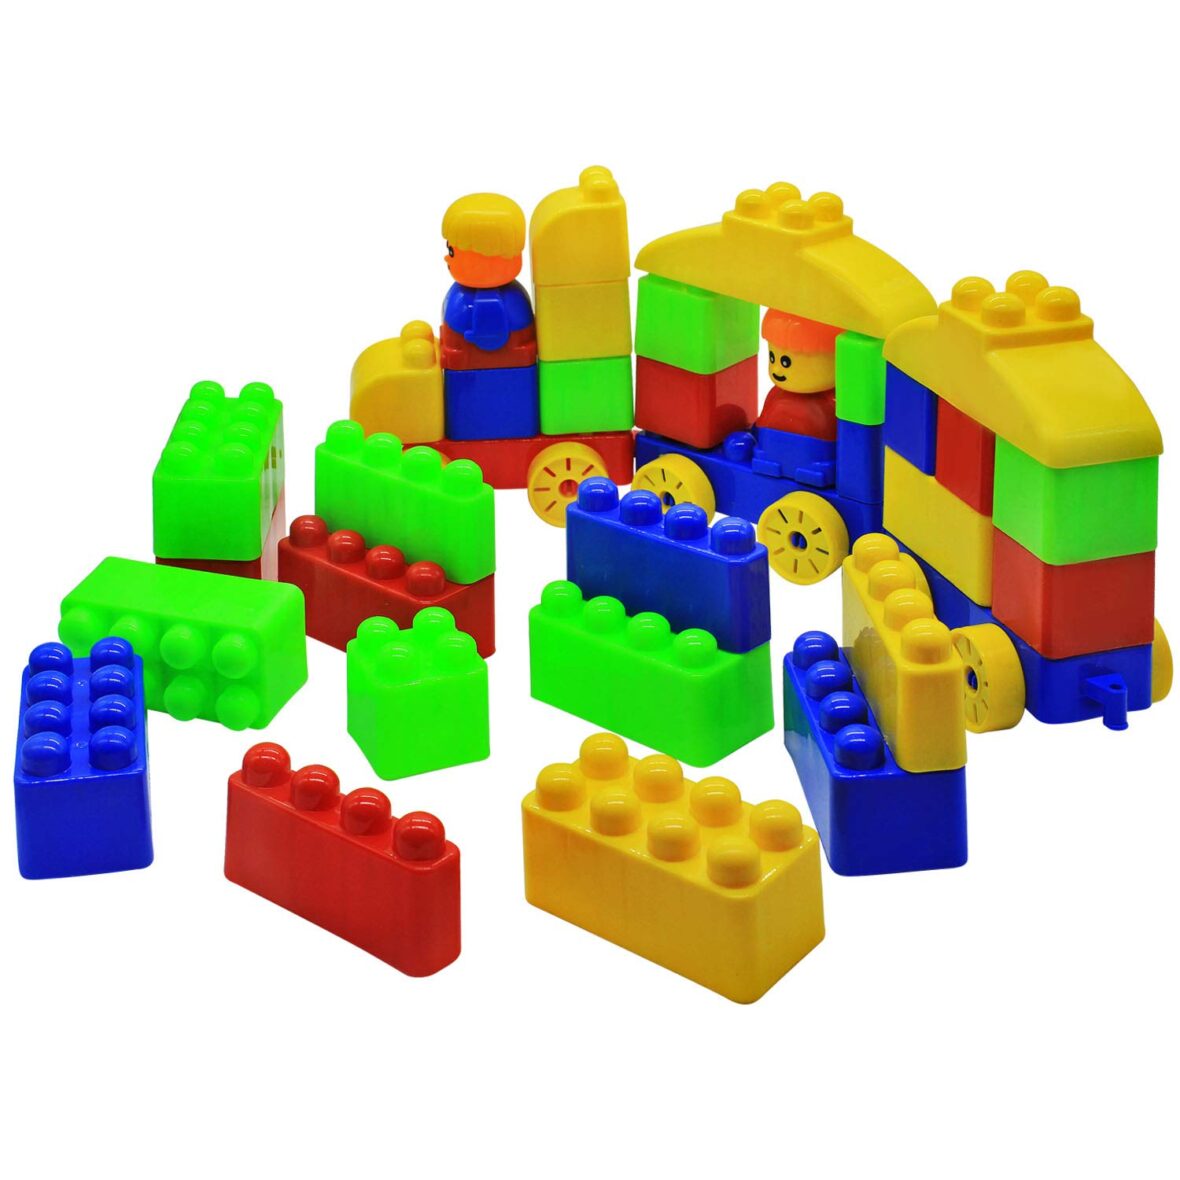 Ekta Young Builders Set 2 Blocks & Bricks Toy Game